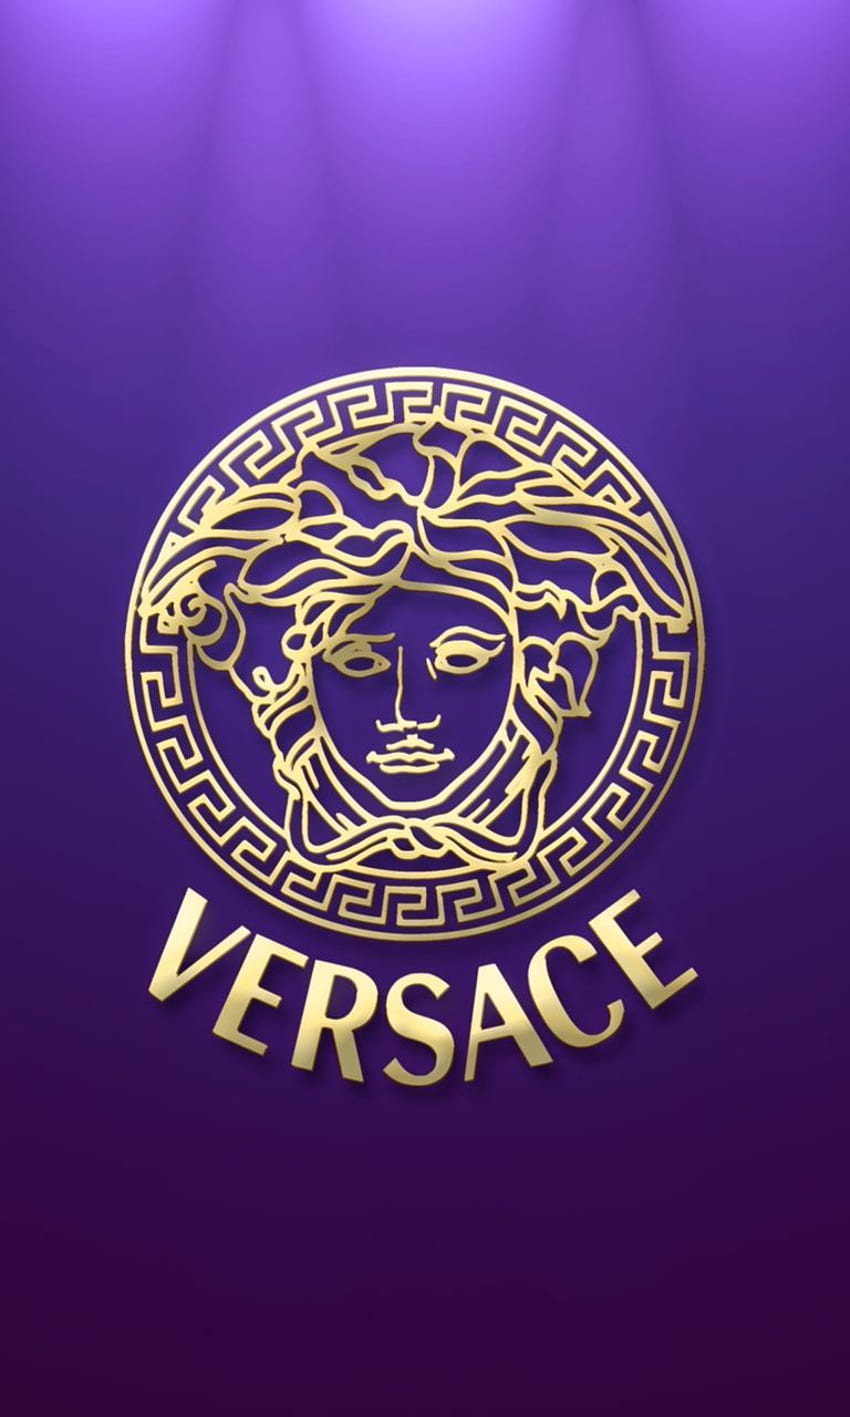 Versace - Fondos de pantalla gratis para . 바탕 화면 배경, 베르사체, 바탕화면, Versace ロゴ 7 HD電話の壁紙